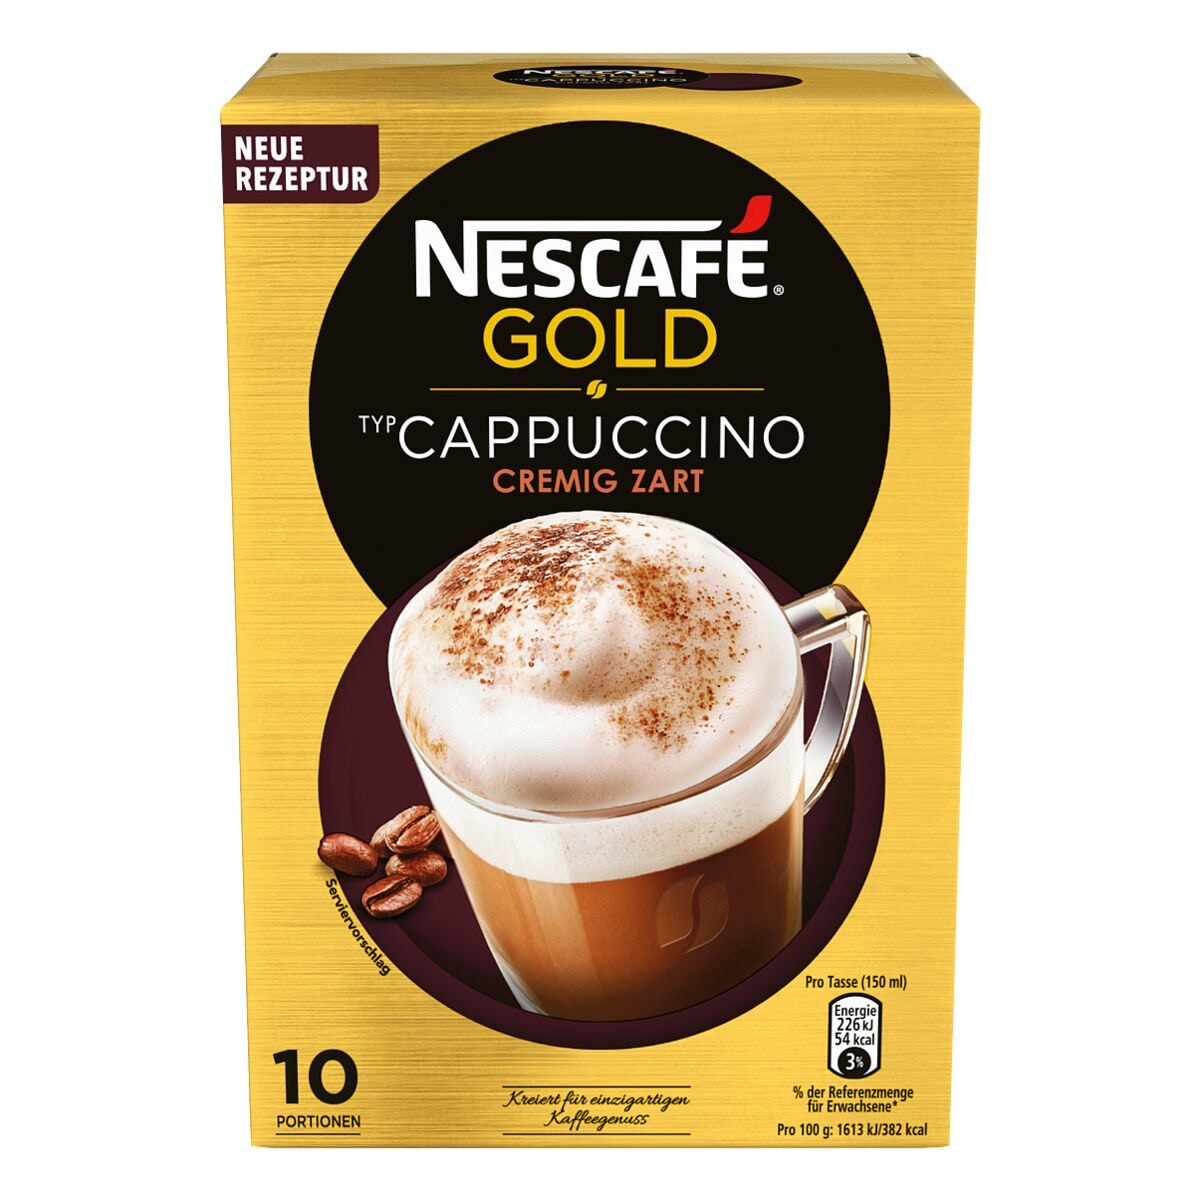 Nescafe Cappuccino im Portionsbeutel